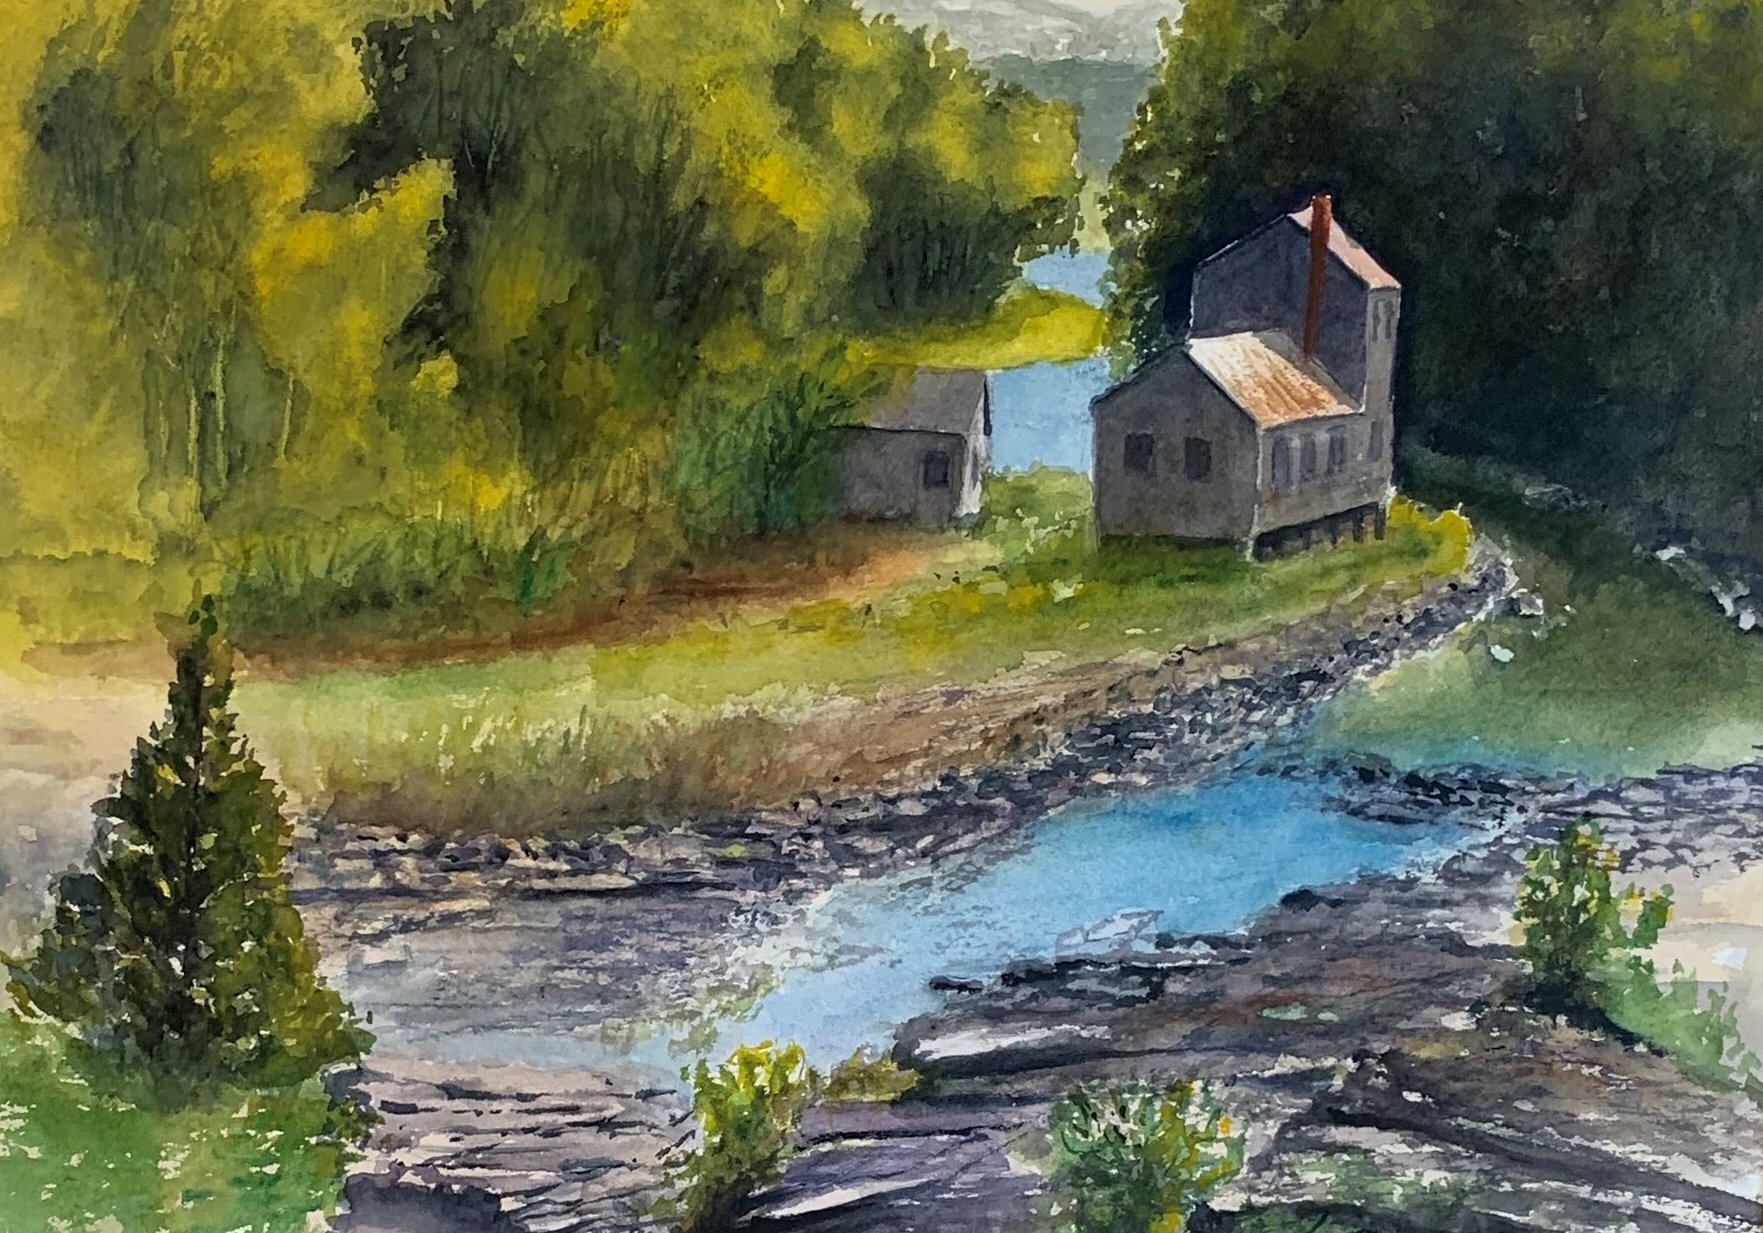 Peter	Eisenbarth	River Bend	Watercolor	 $450 	Robert Mesrop